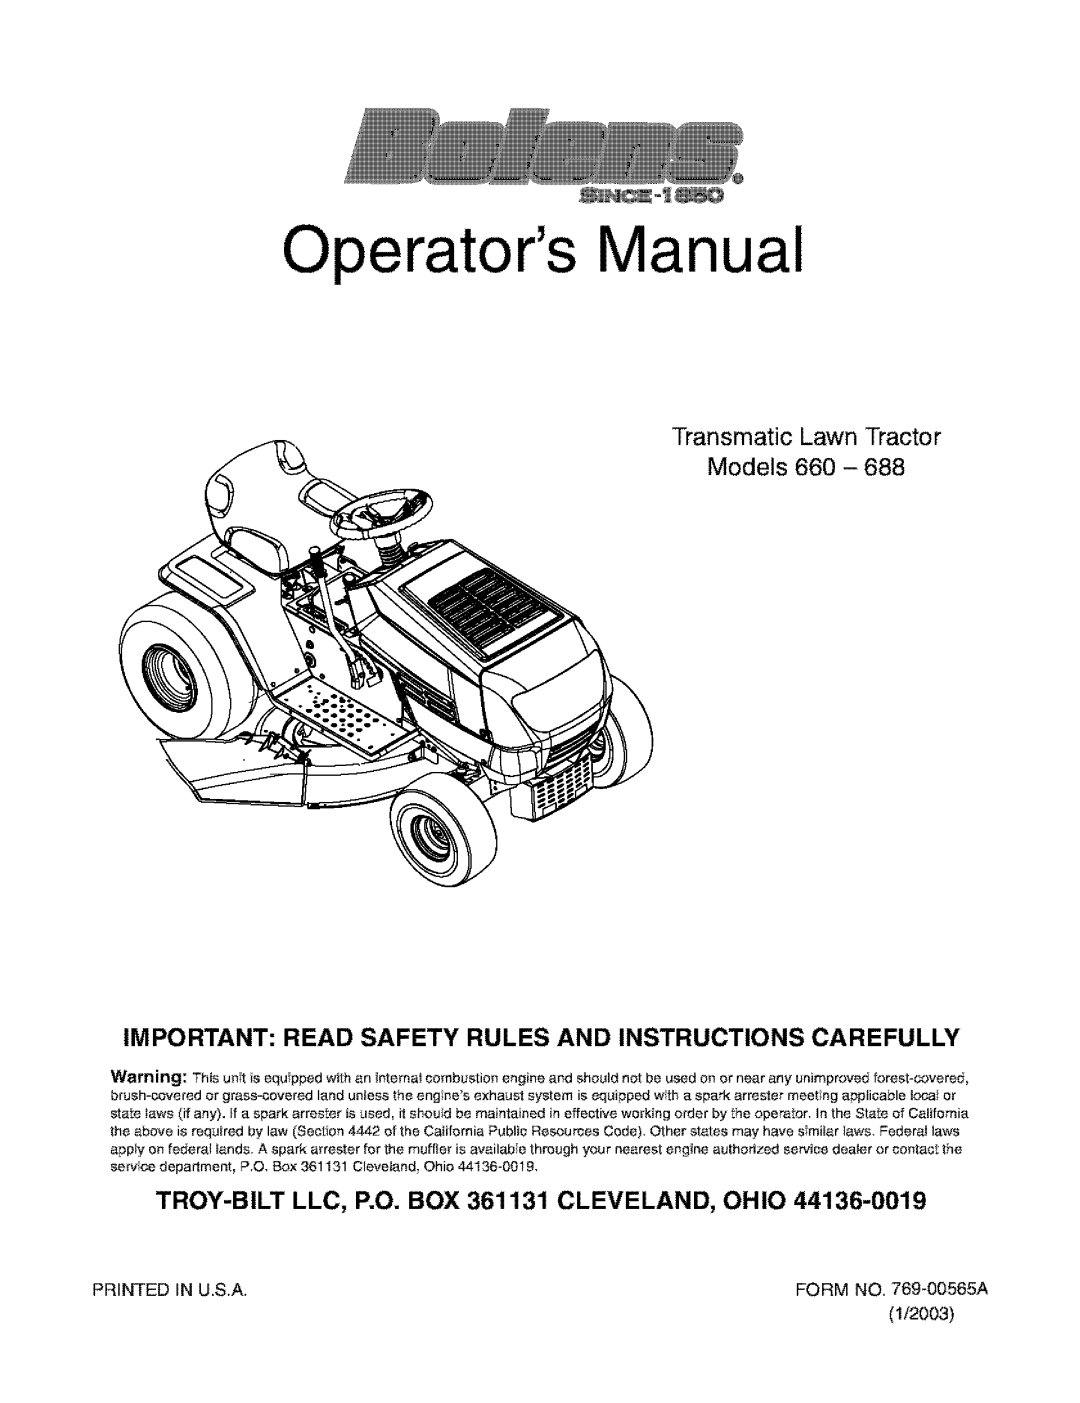 Bolens 660 manual Transmatic Lawn Tractor Models, TROY-BILTLLC, P.O. BOX 361131 CLEVELAND, OHIO, 1/2003, Operators Manual 